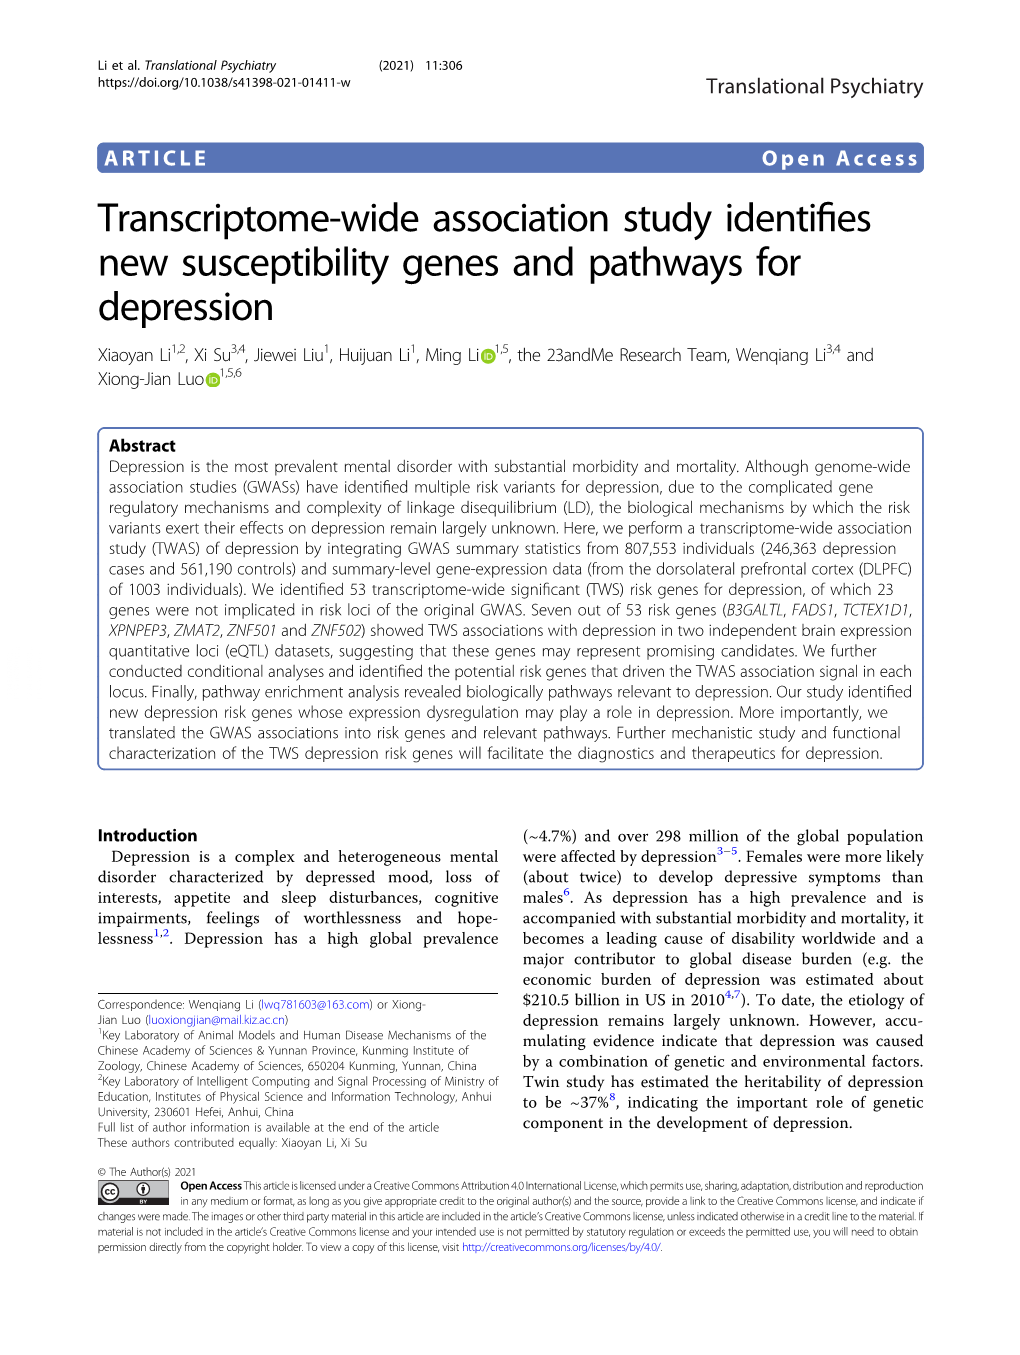 Transcriptome-Wide Association Study Identifies New Susceptibility Genes